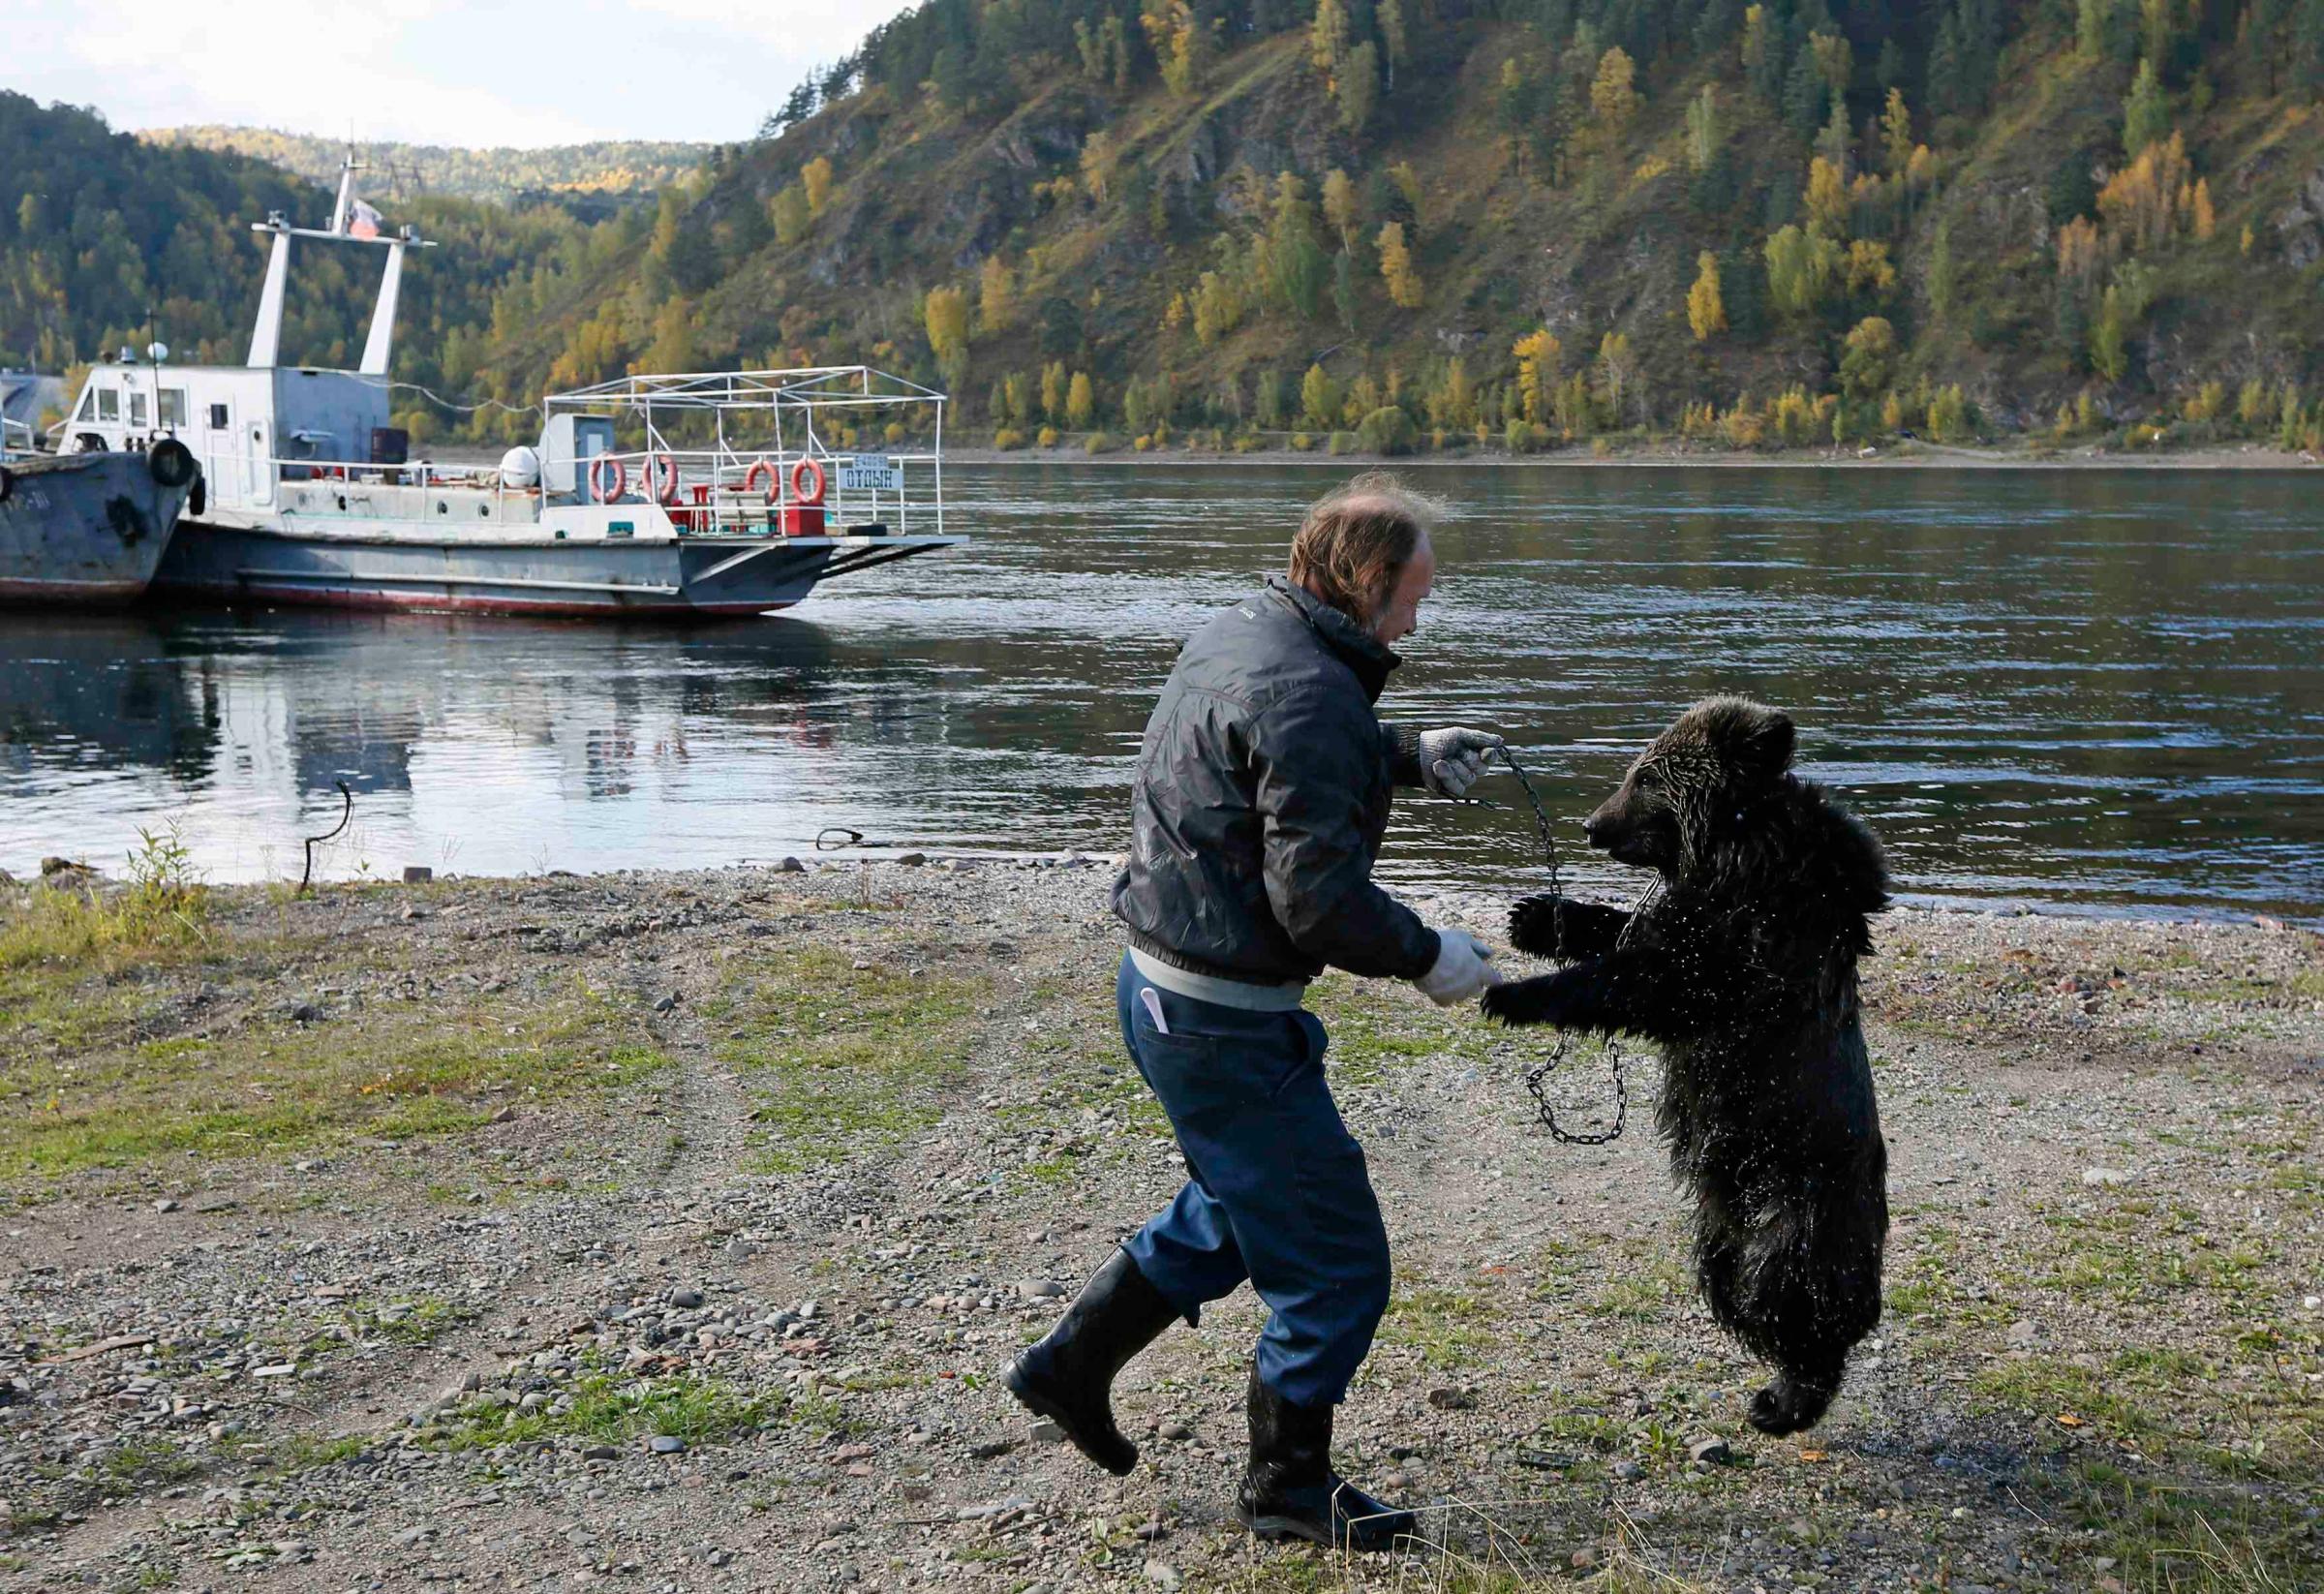 Alexander Kharatokin plays with a 9-month-old brown bear named Masha on the banks of the Yenisei River outside Krasnoyarsk, Siberia on Sept. 19, 2014.